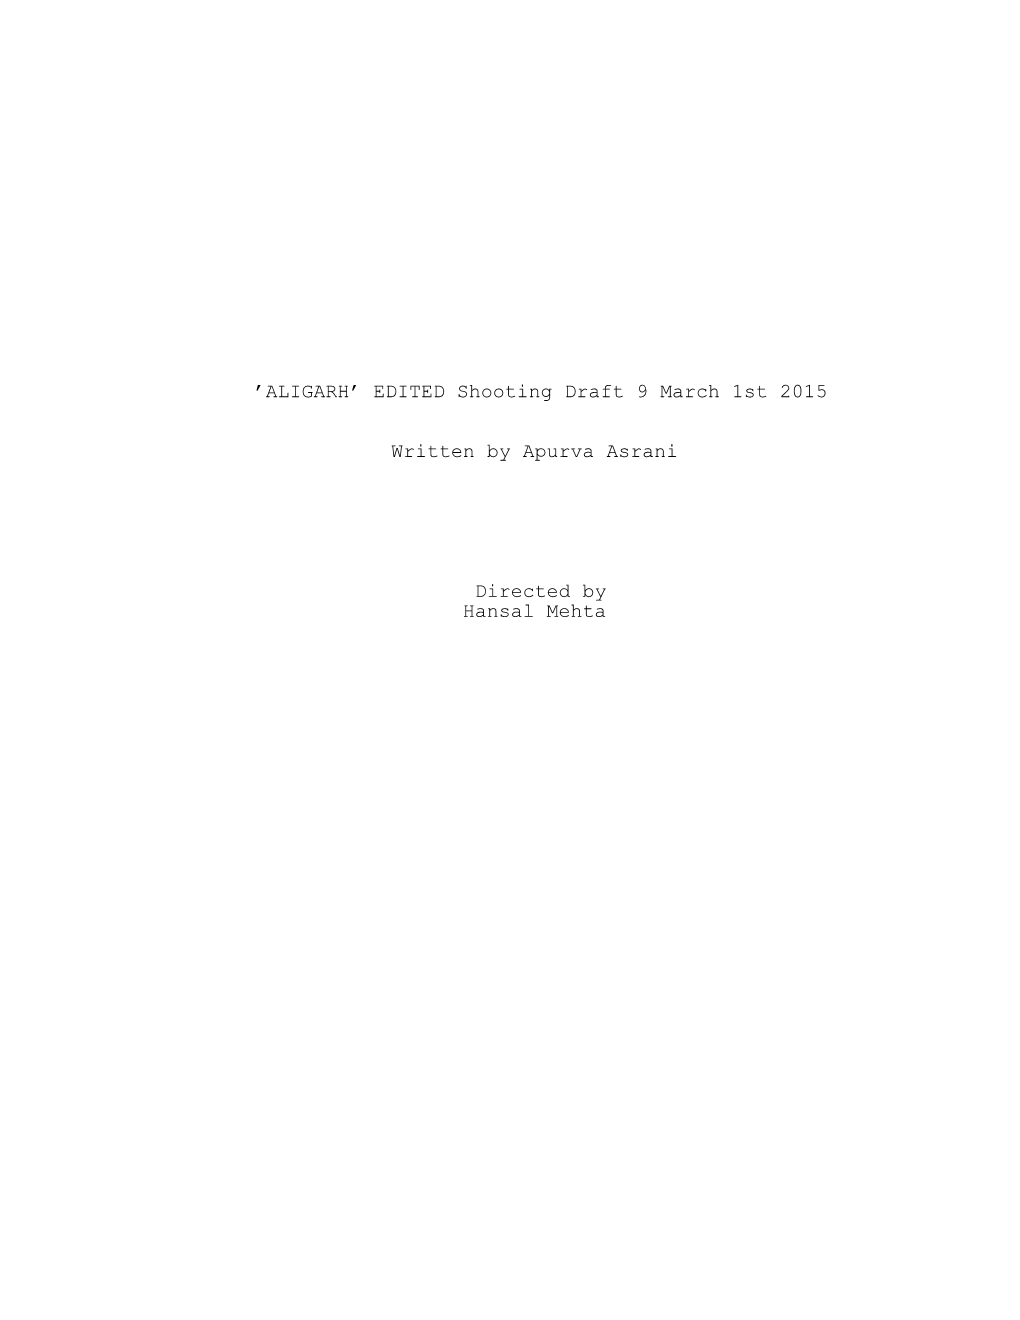 ALIGARH’ EDITED Shooting Draft 9 March 1St 2015